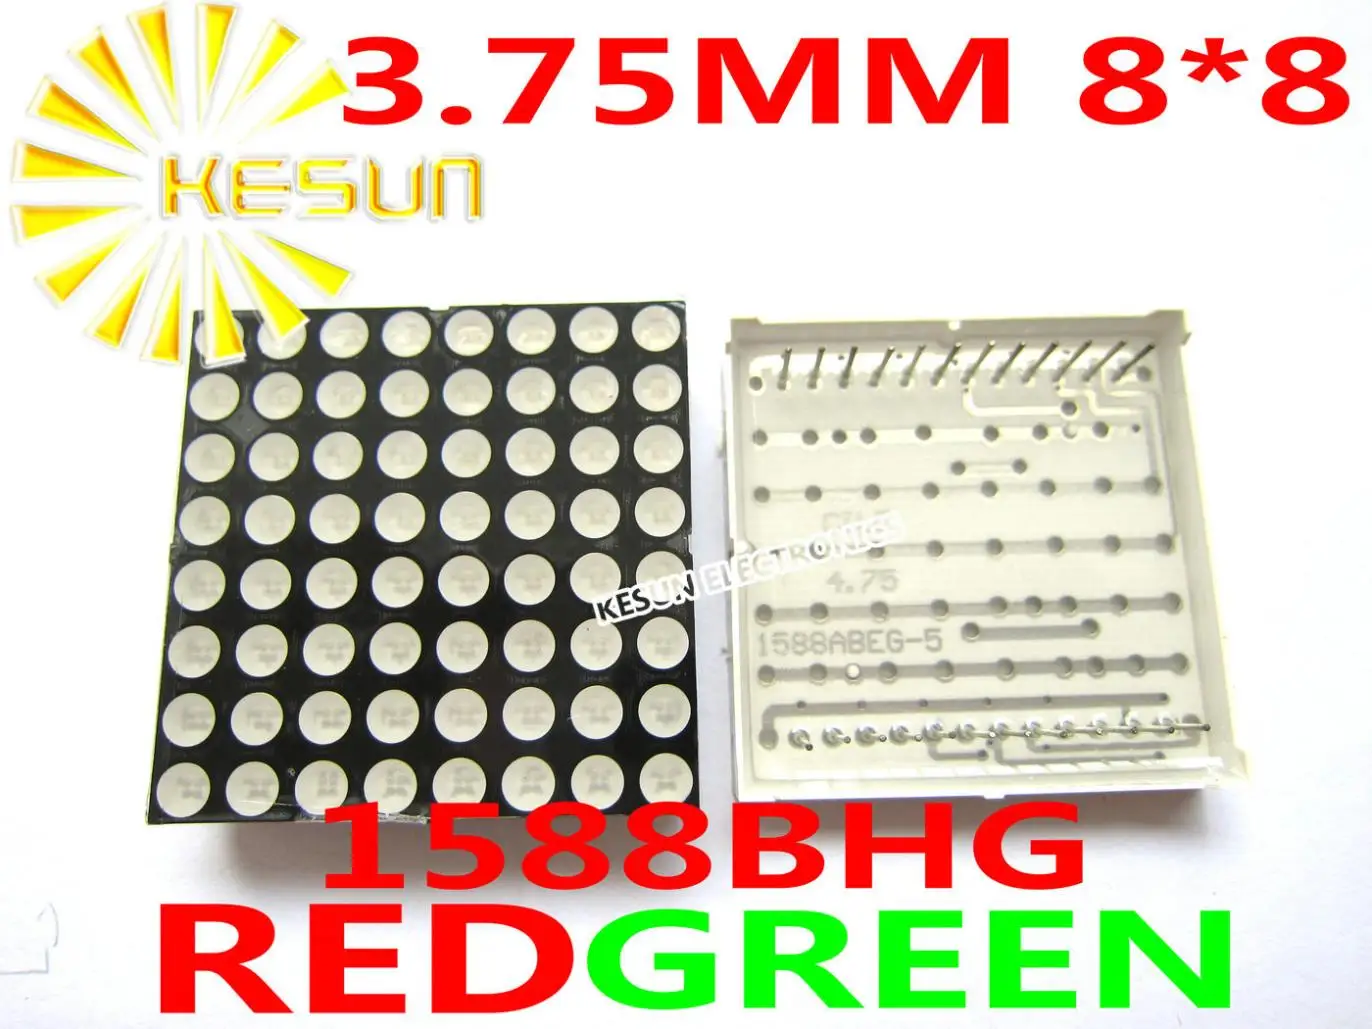 

FREE SHIPPING 10PCS x 3.75MM 8X8 Red Green bi-color Common Anode 38*38 LED Dot Matrix Digital Tube Module 1588BHG Display Module